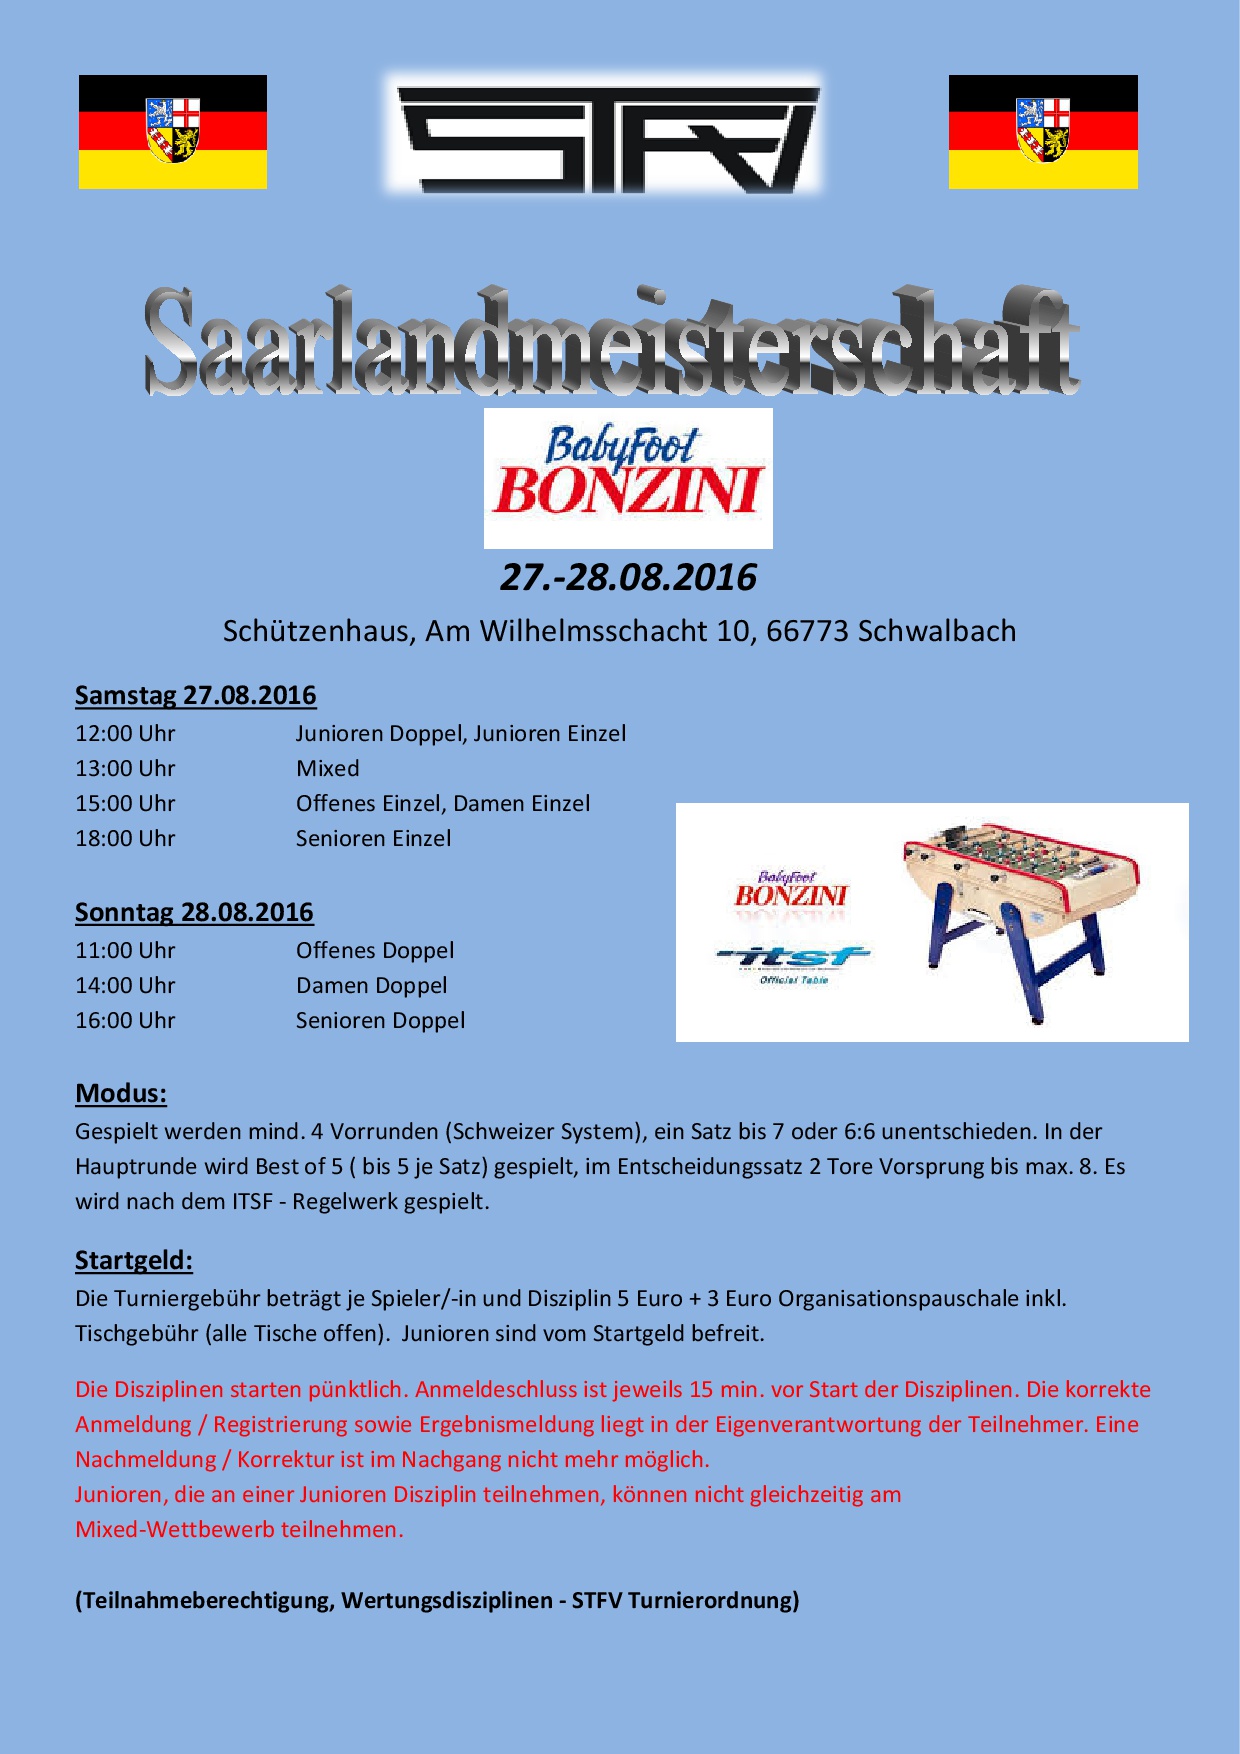 Saarlandmeisterschaft Bonzini 2016